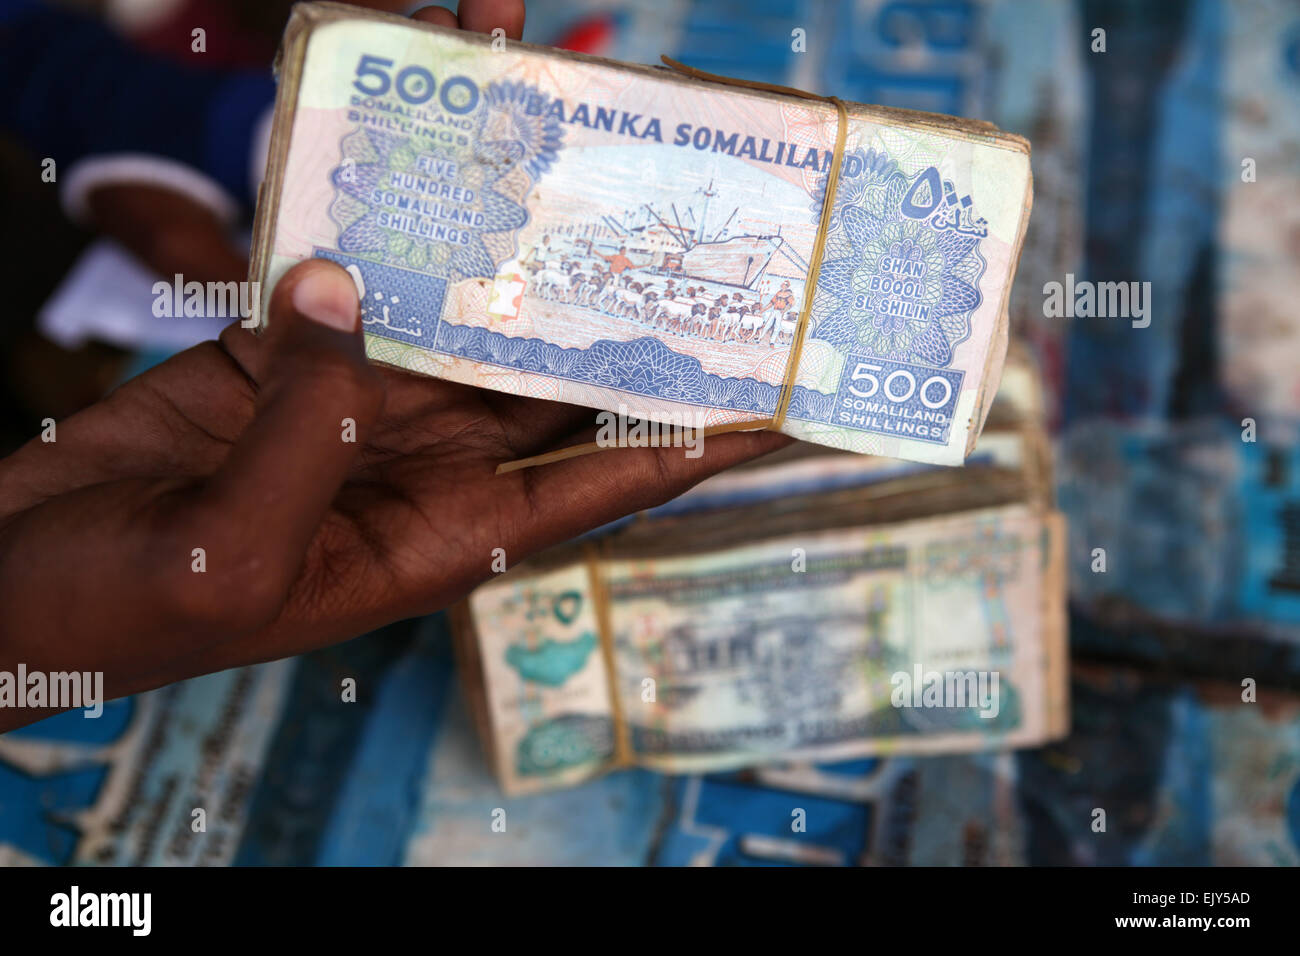 The Somaliland shilling. Stock Photo